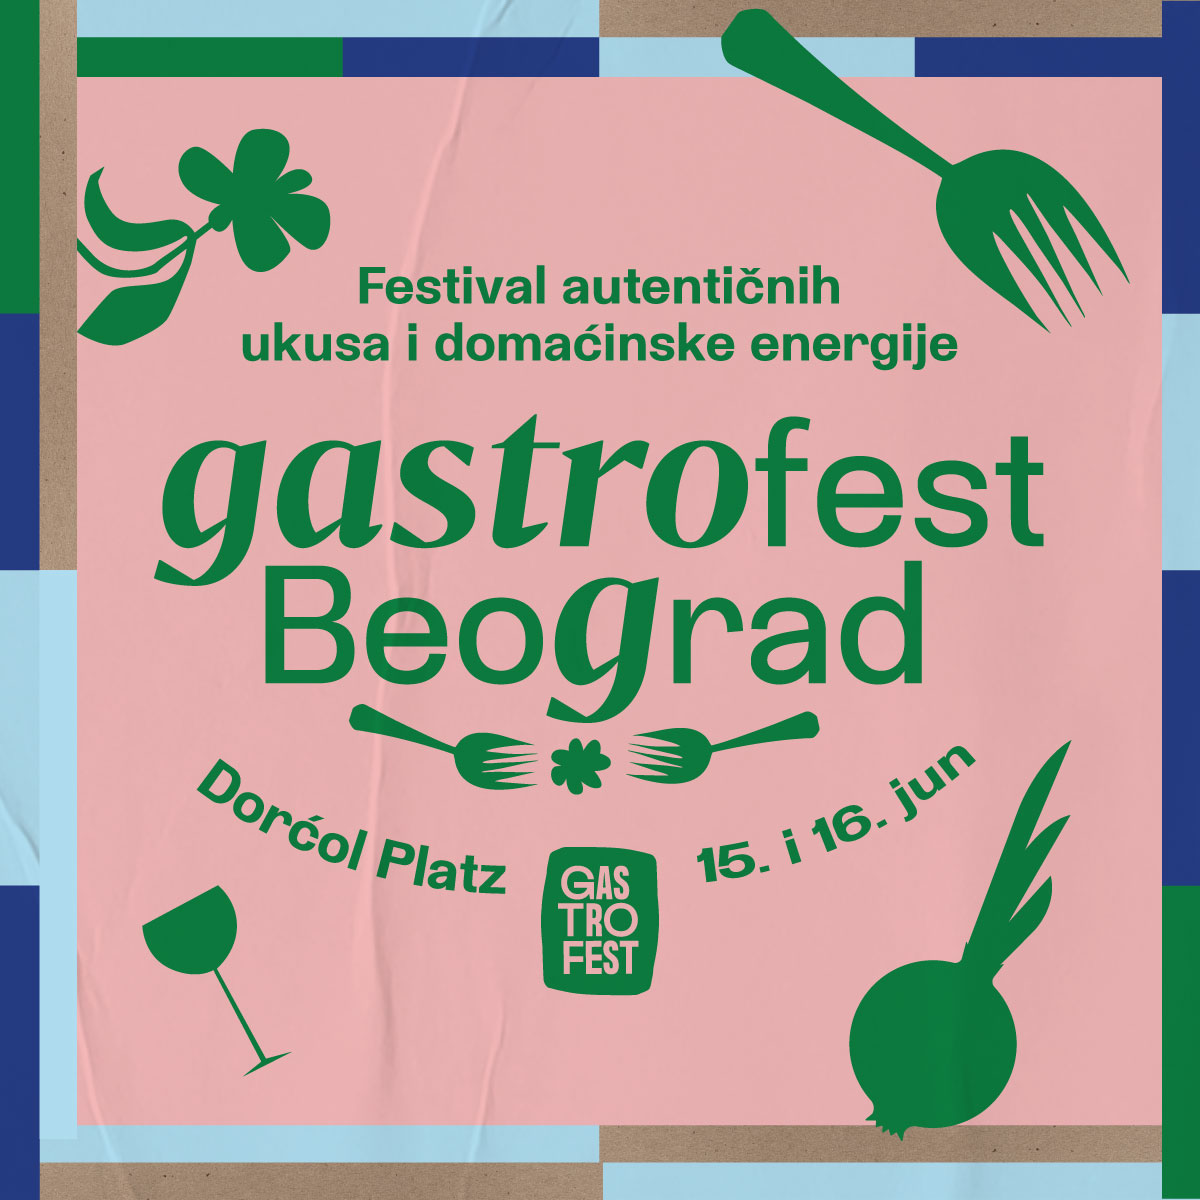 GastroFest, festival visoke gastronomije, 15. i 16. juna na Dorćol Platzu 1